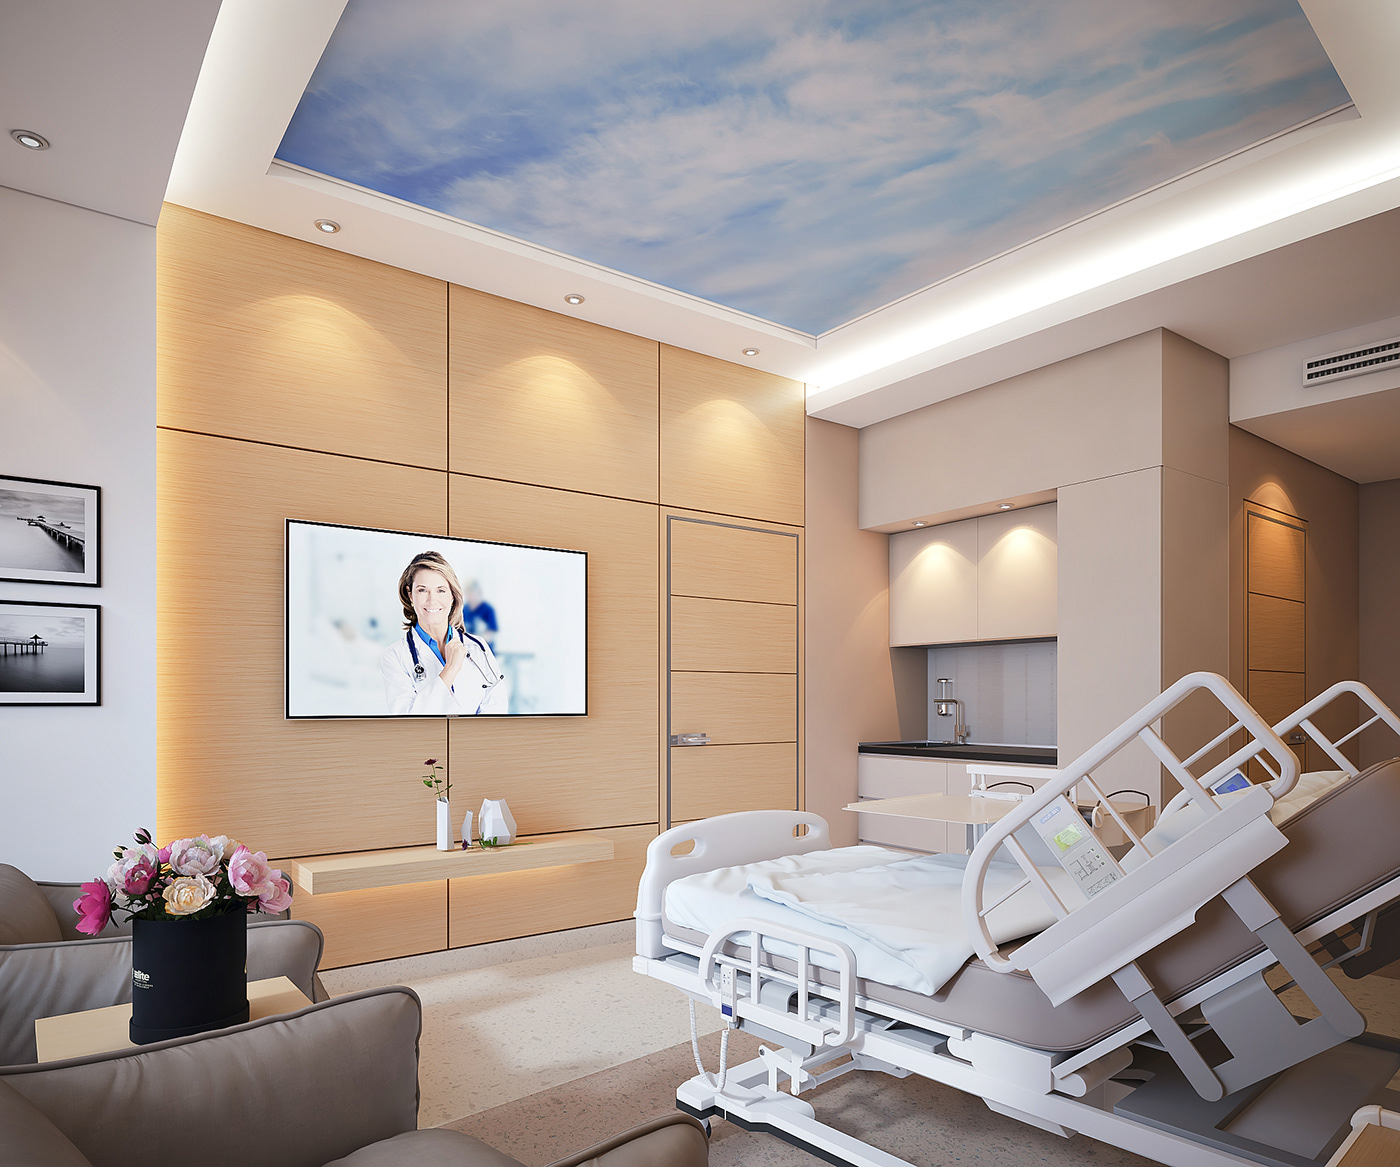 CGI Hospital Suite modern interior design